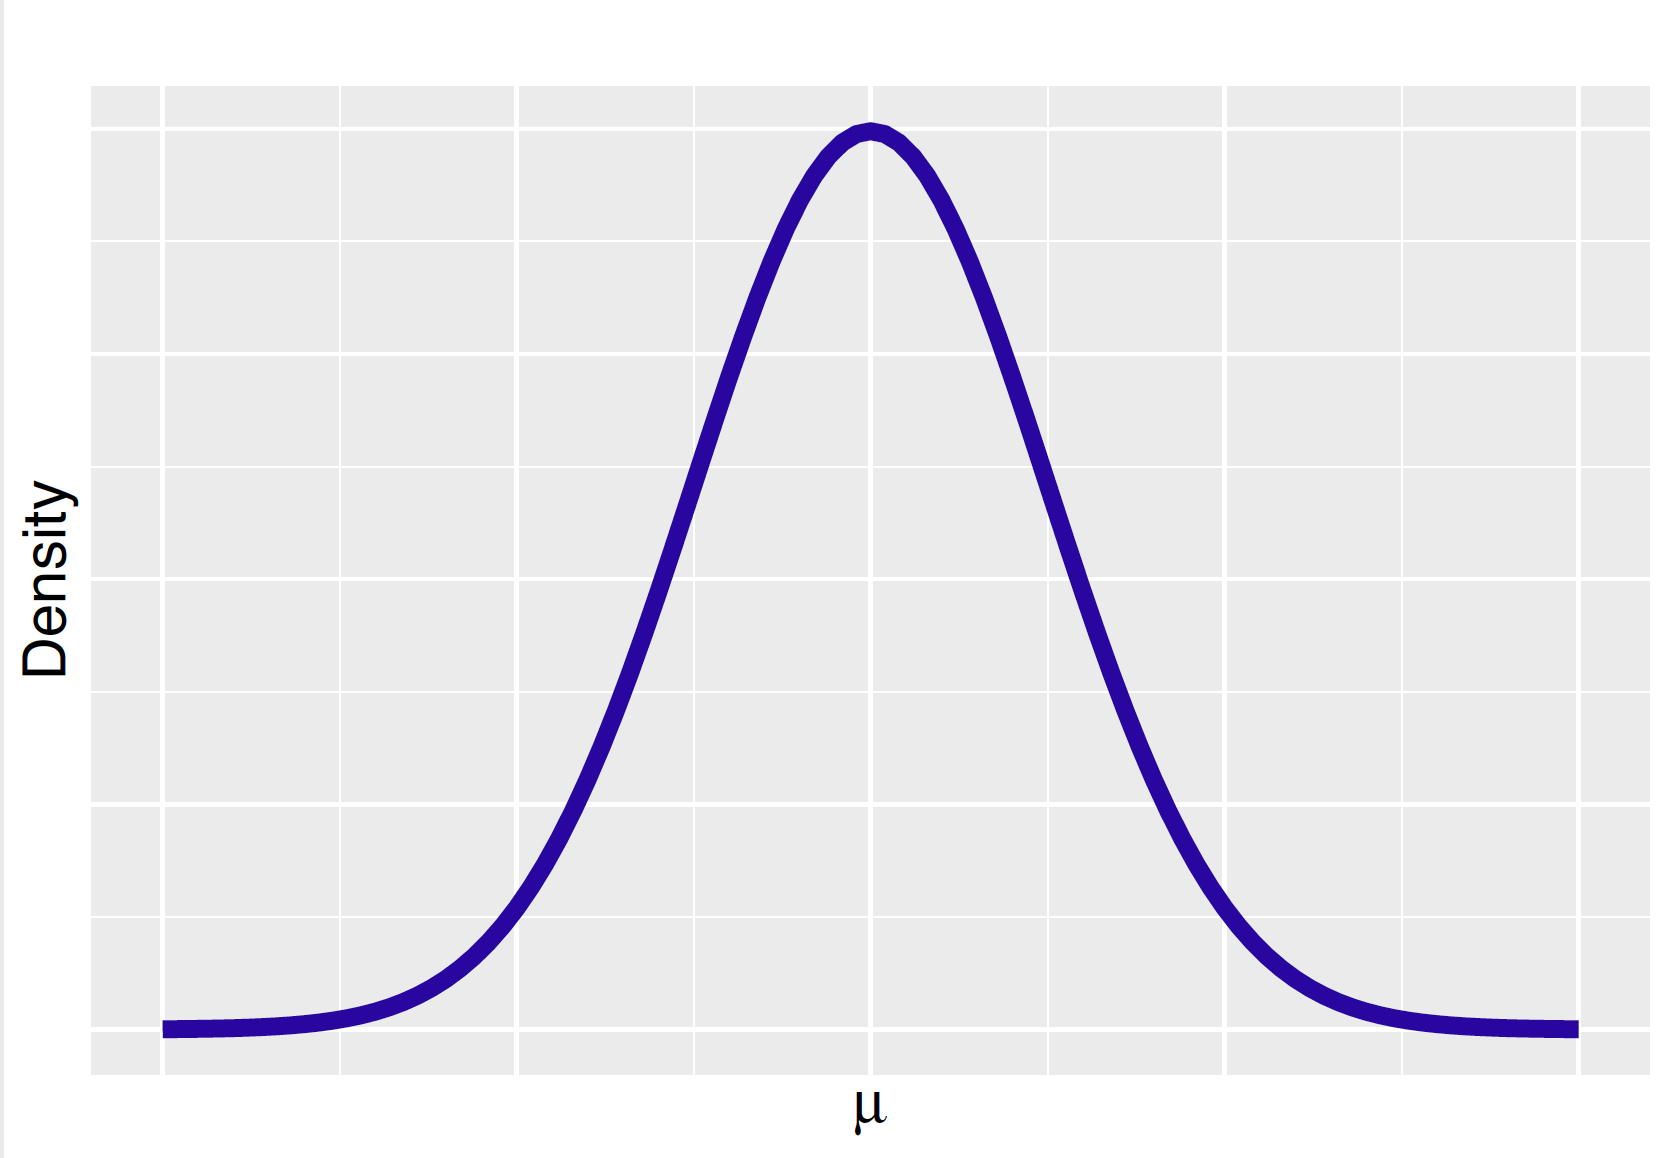 Normal sampling density with mean $\mu$.